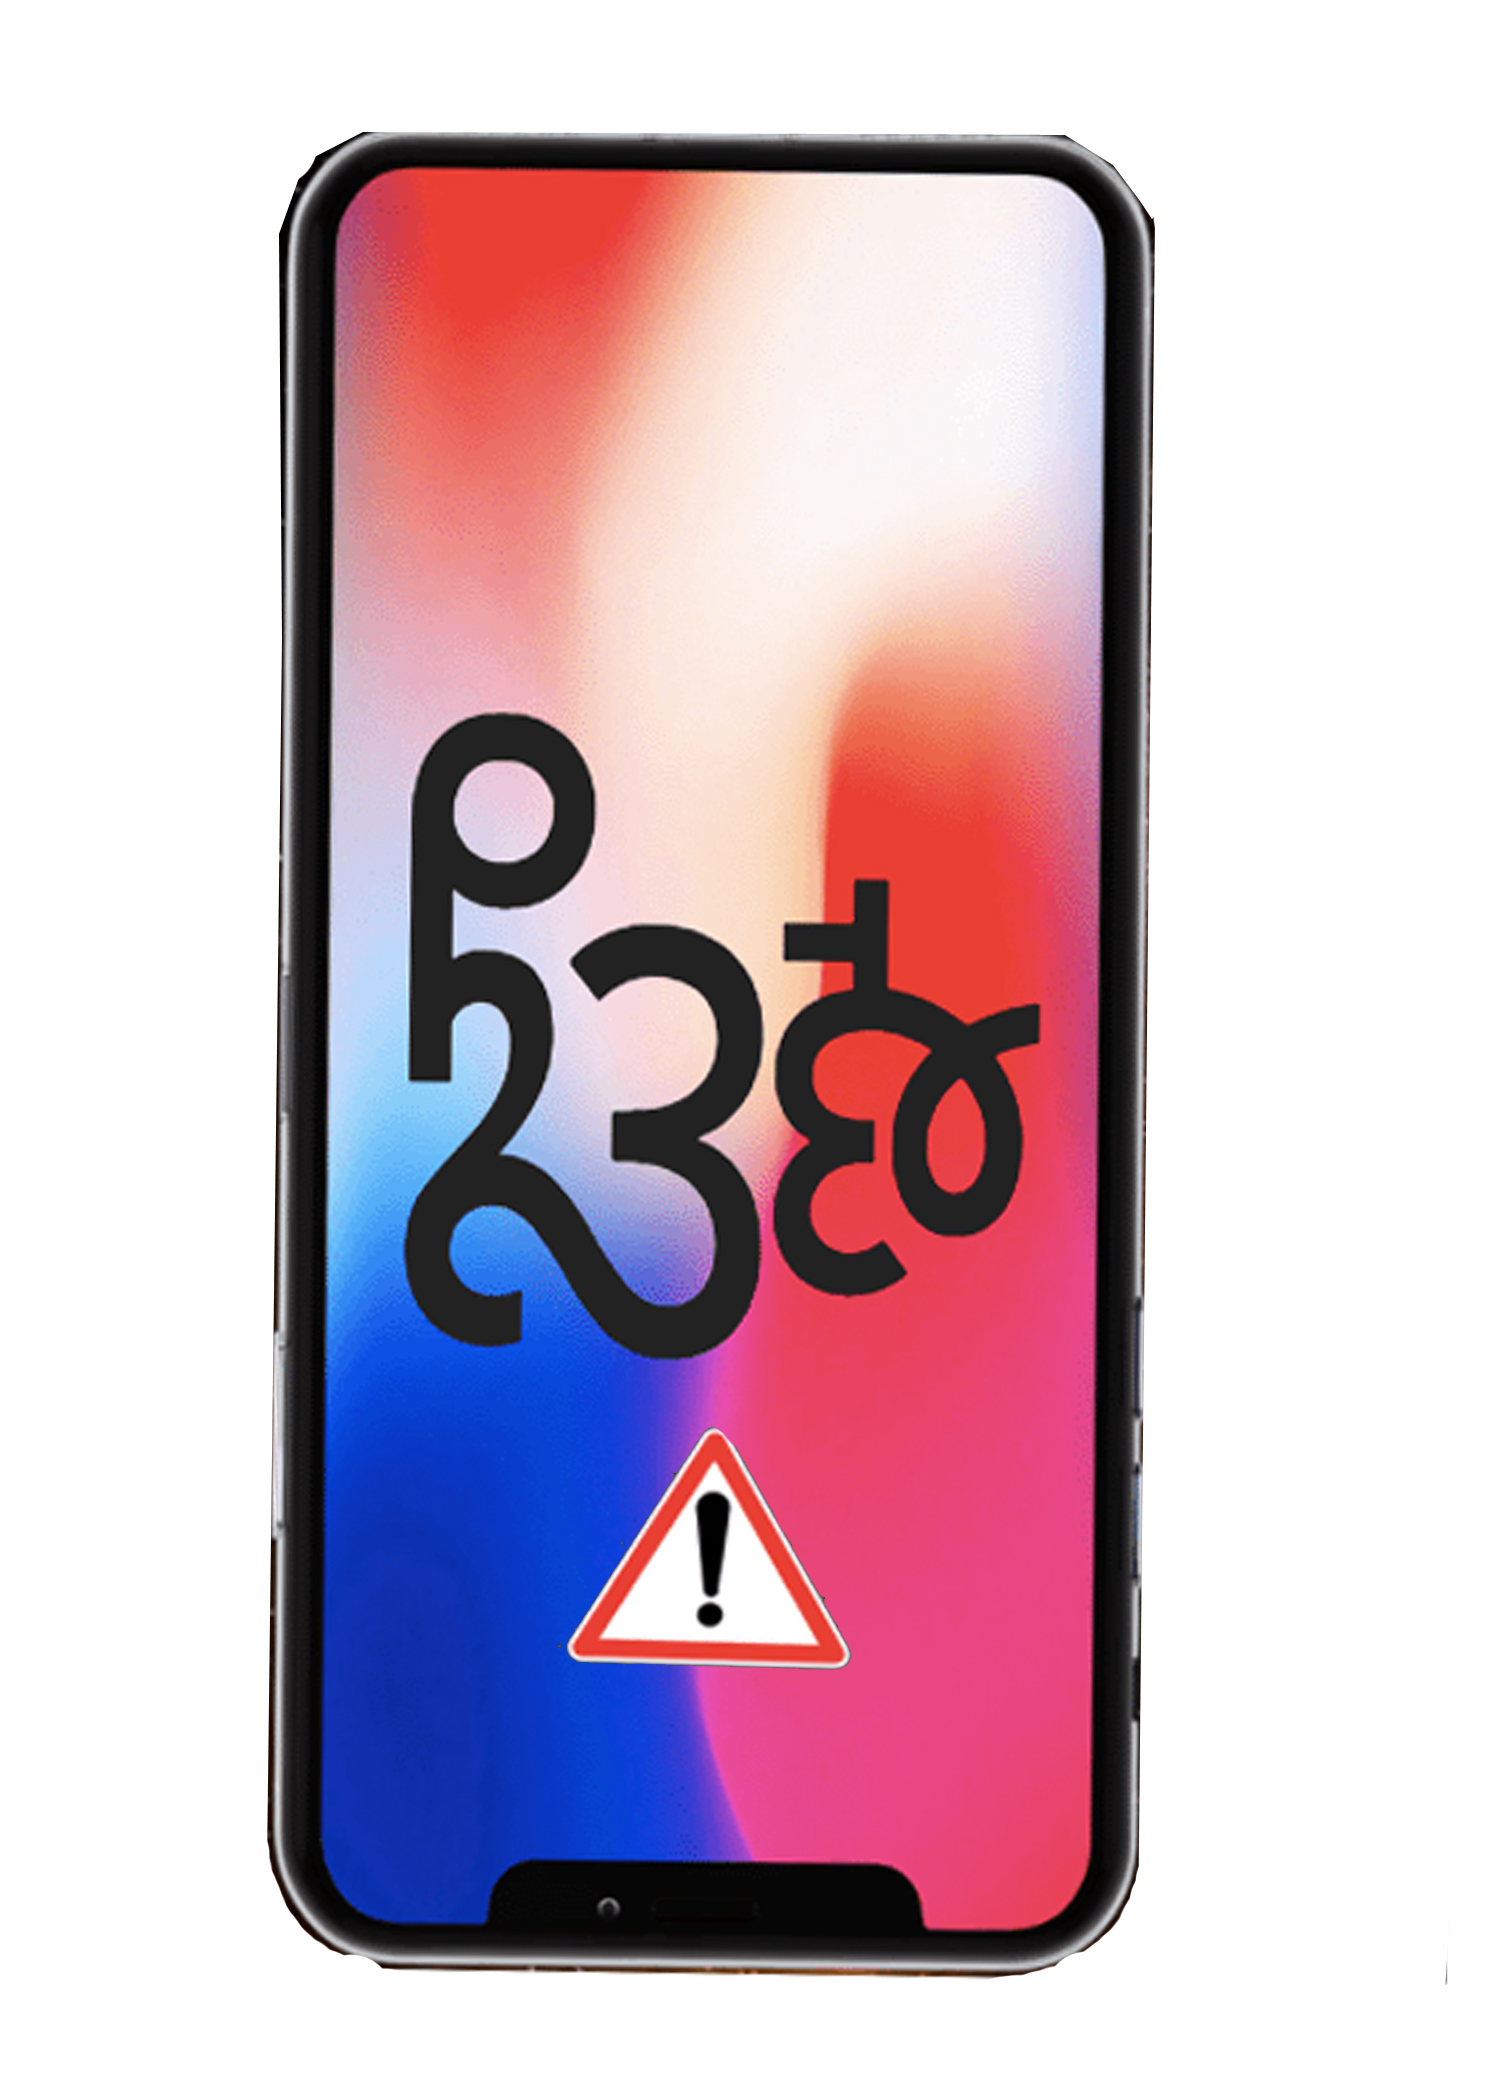 Indian character iPhone (Telugu) Can Crash Any iPhone